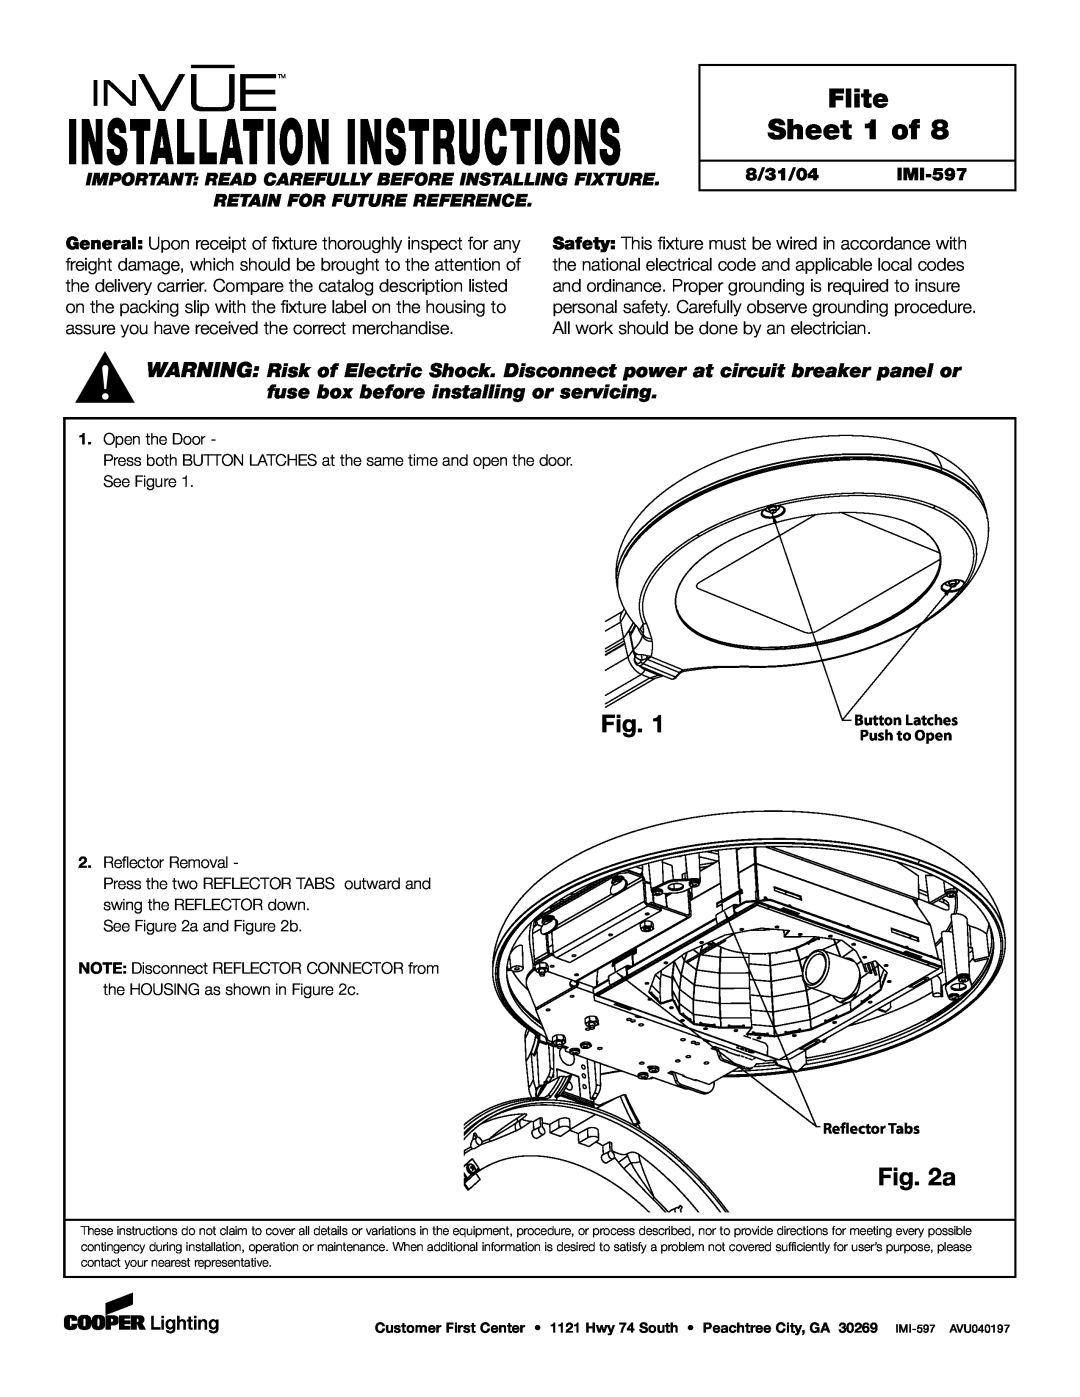 Cooper Lighting installation instructions Installation Instructions, Sheet 1 of, Flite, 8/31/04 IMI-597 